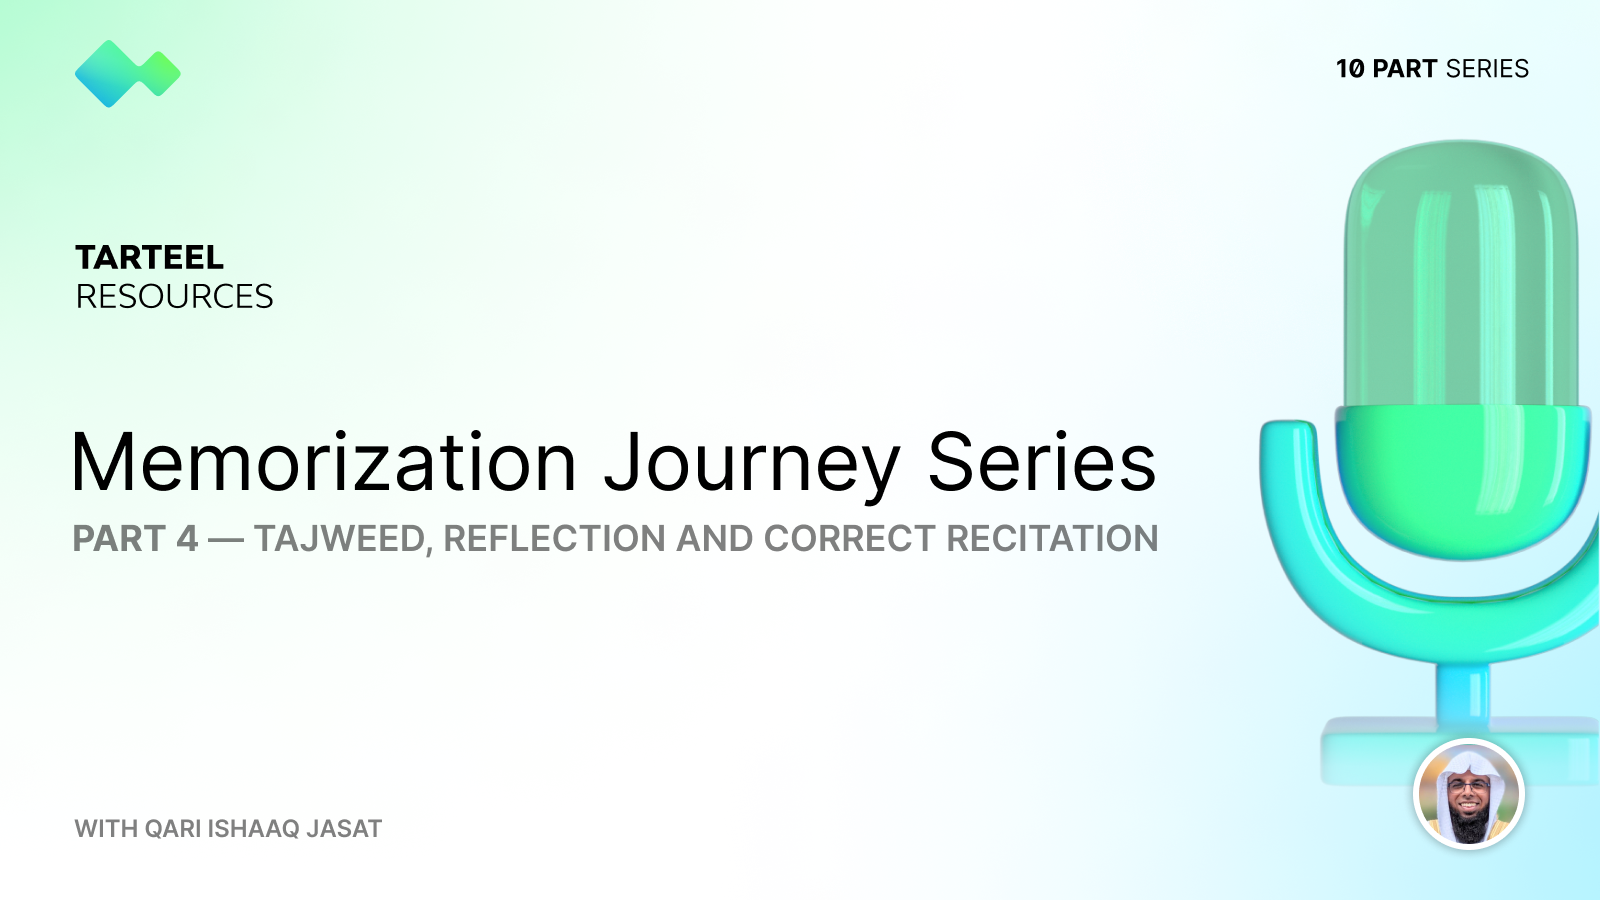 Memorization Journey Series, Part 4 - Tajweed, Reflection and Correct Recitation with Qari Ishaaq Jasat